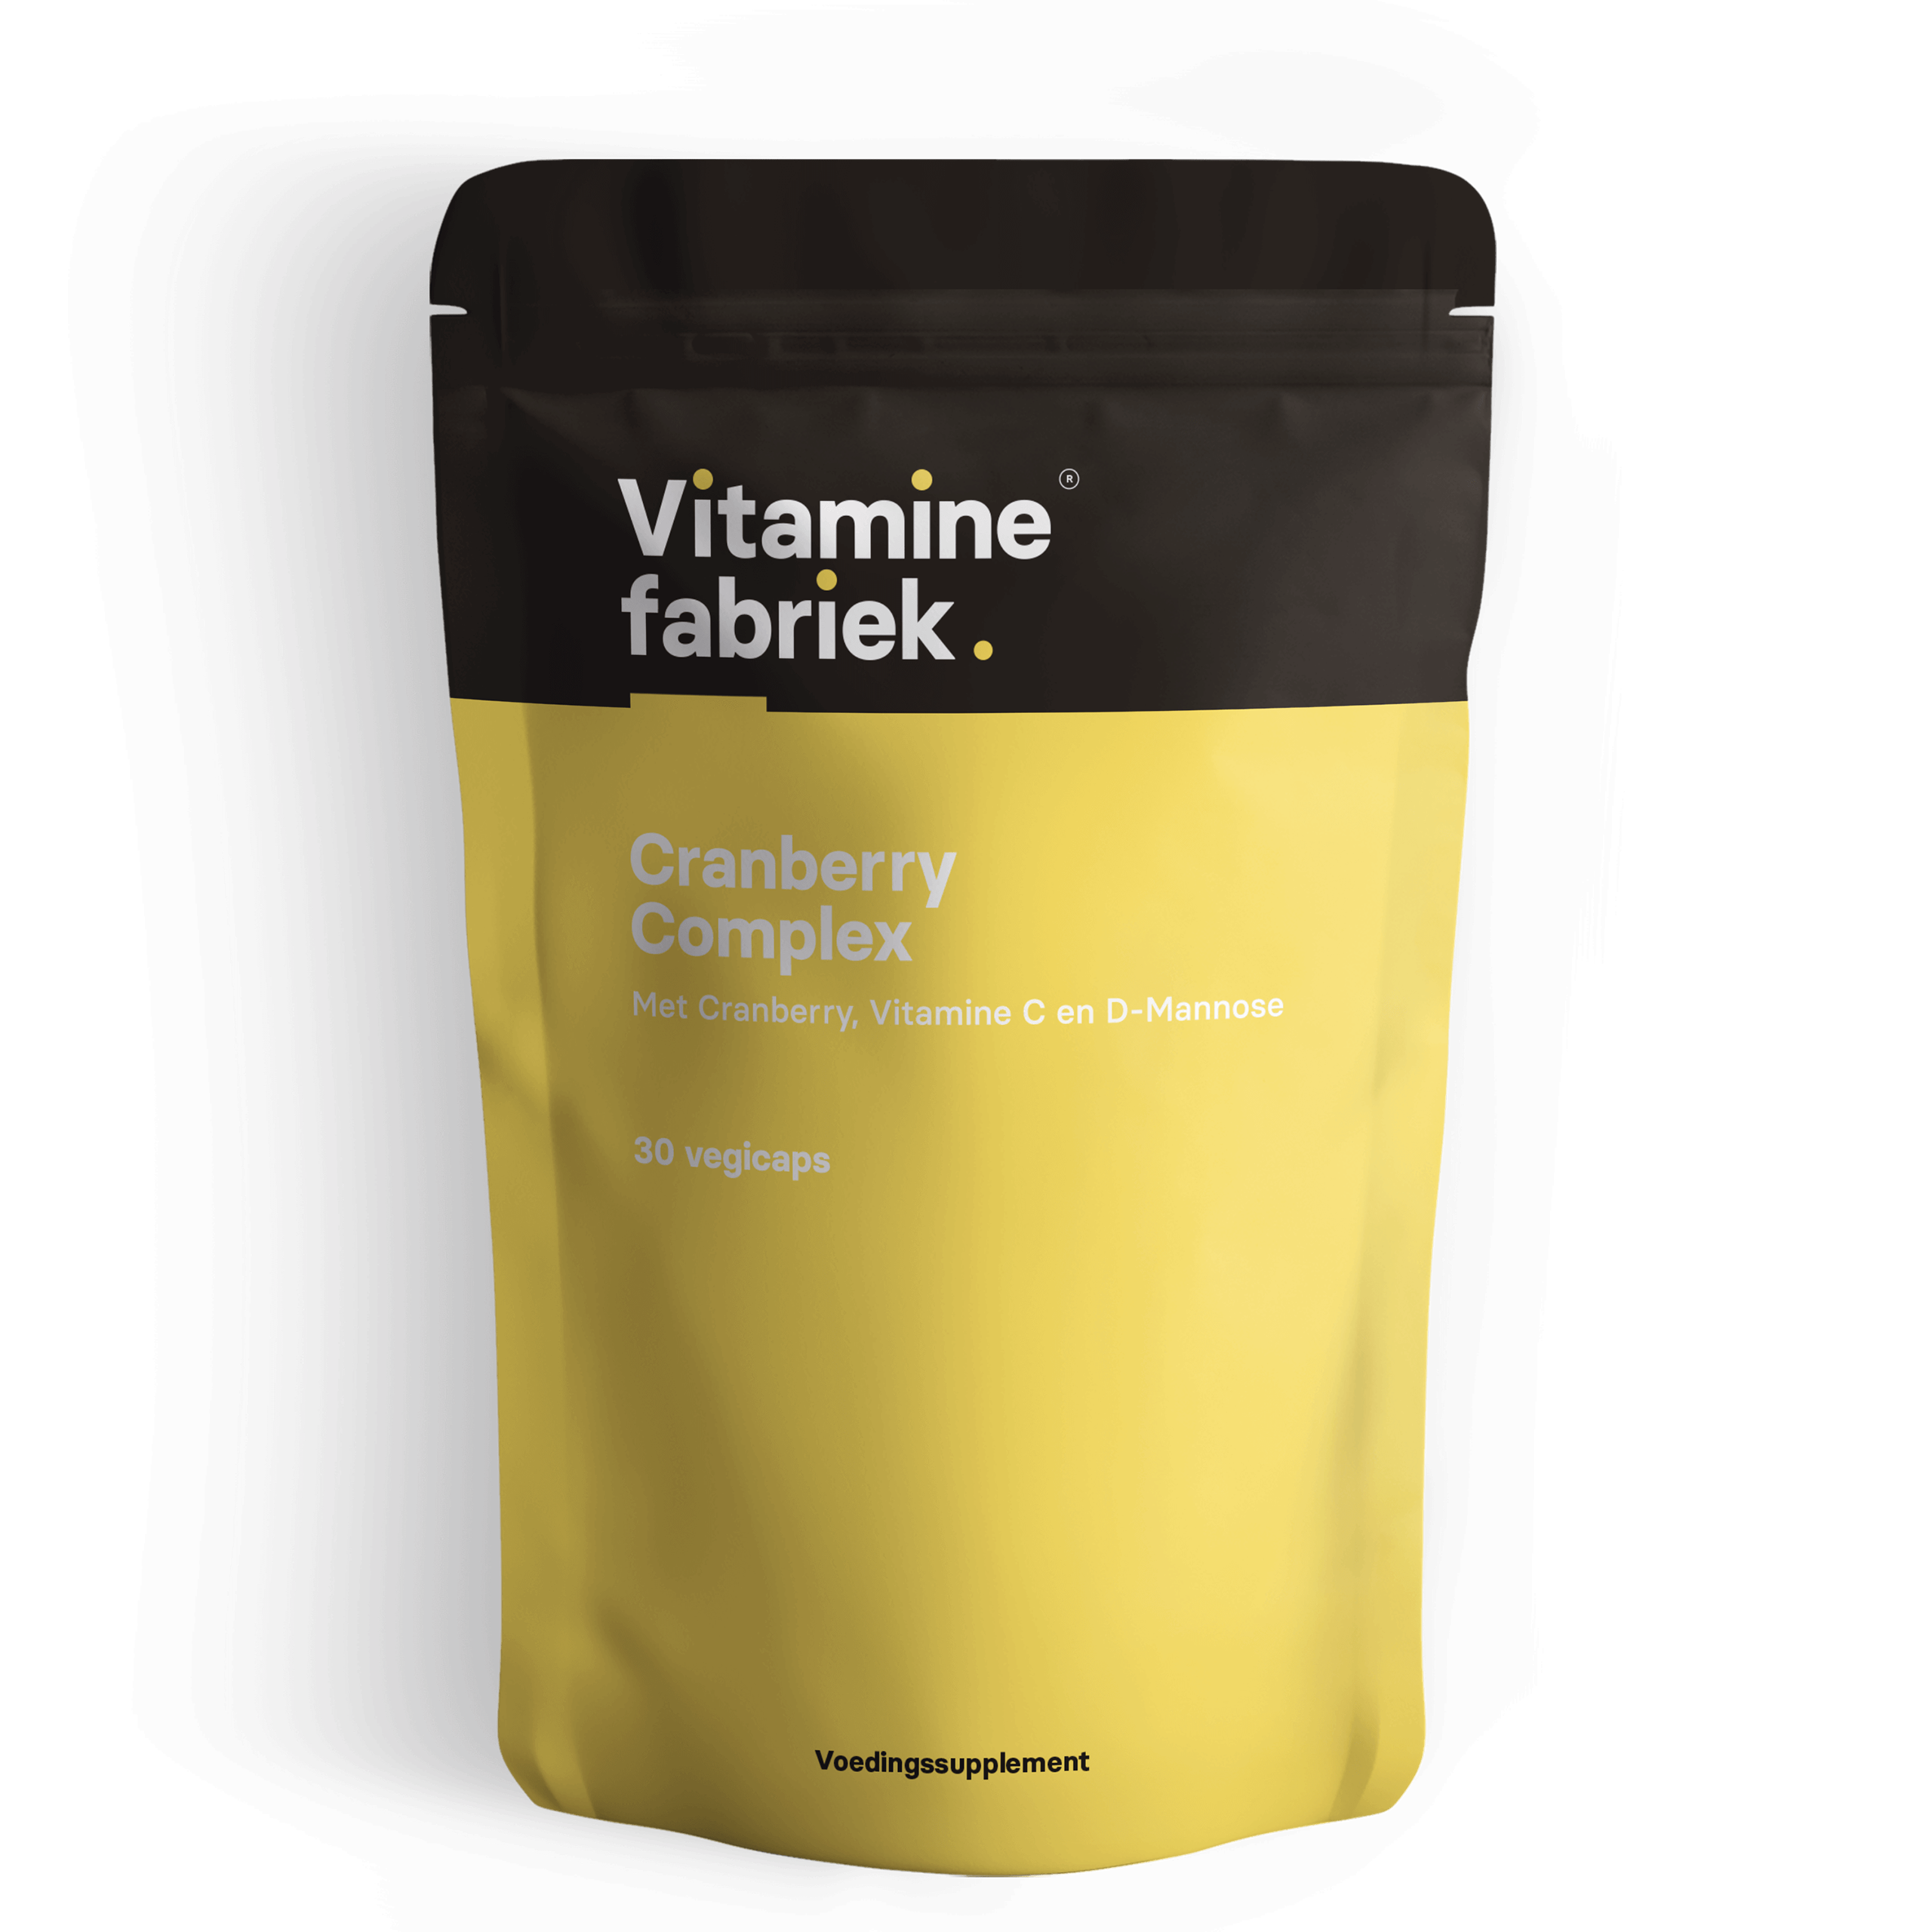 Cranberry Complex - 30 vegicaps - Vitaminefabriek.nl